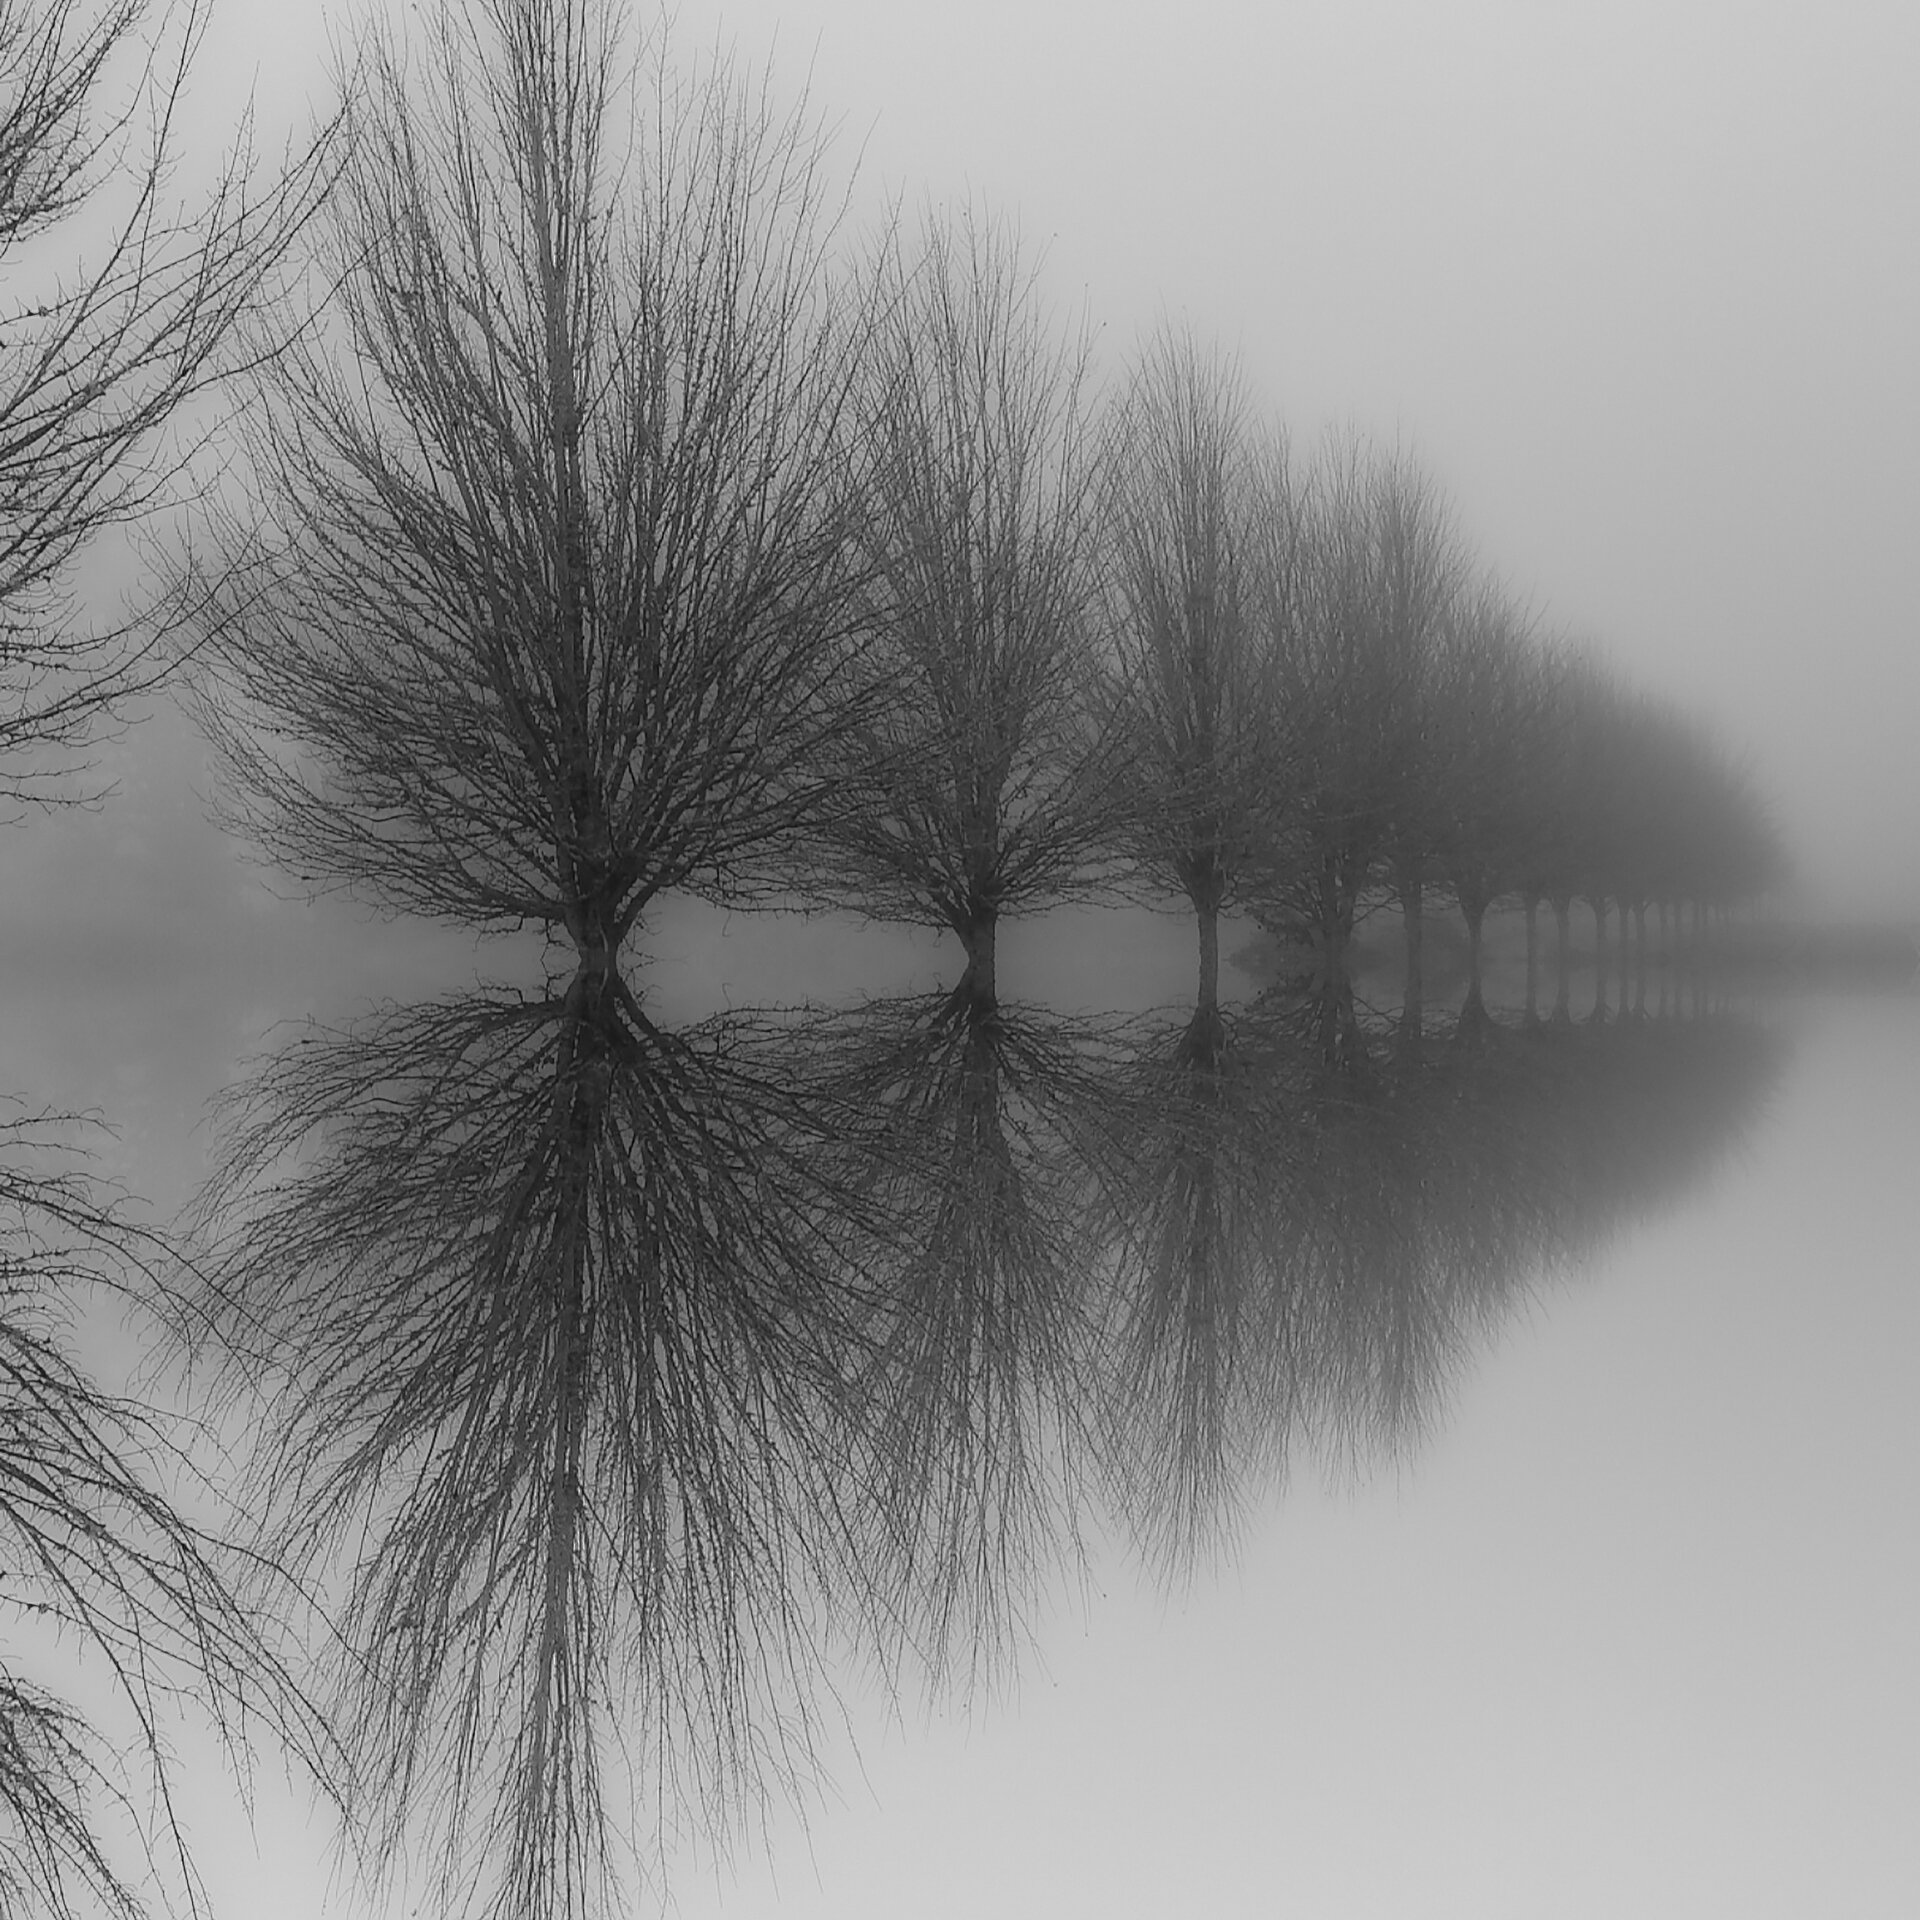   Steven Kratka   “Indefinite Fog” 24" x 24" x 1"; Metallic Photographic print $850. 